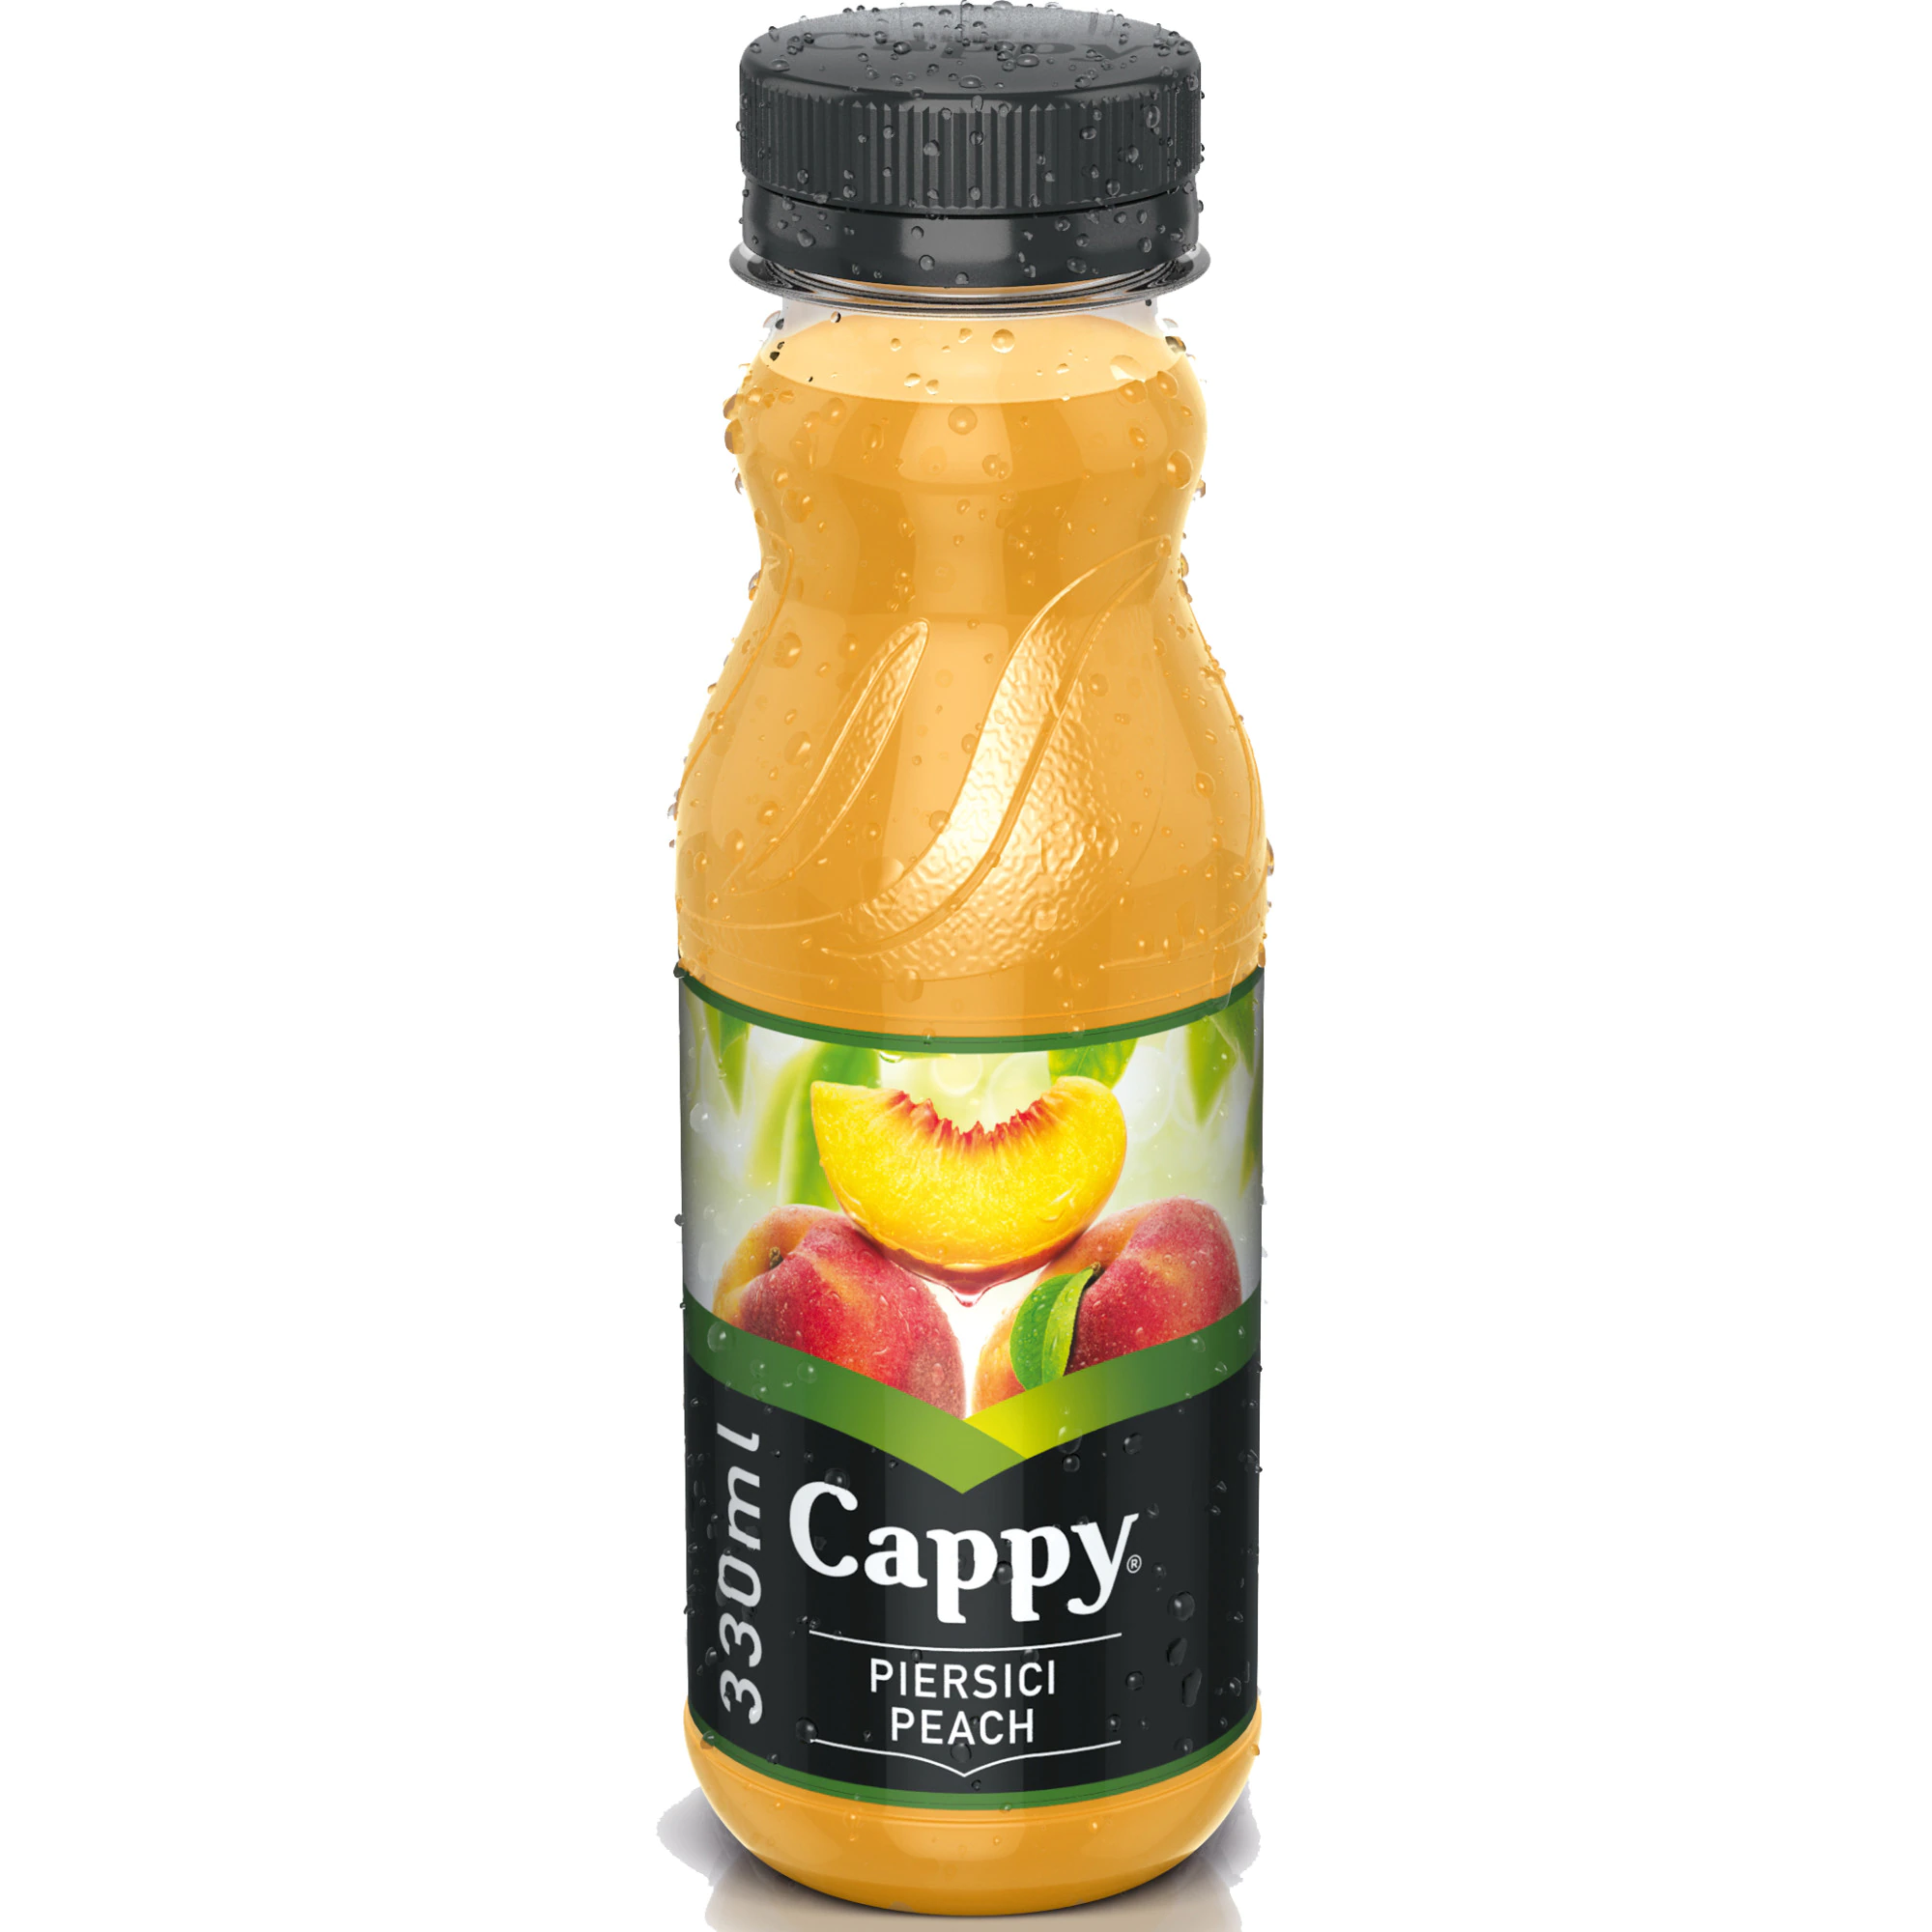 Cappy pulpy peach 0.33L image